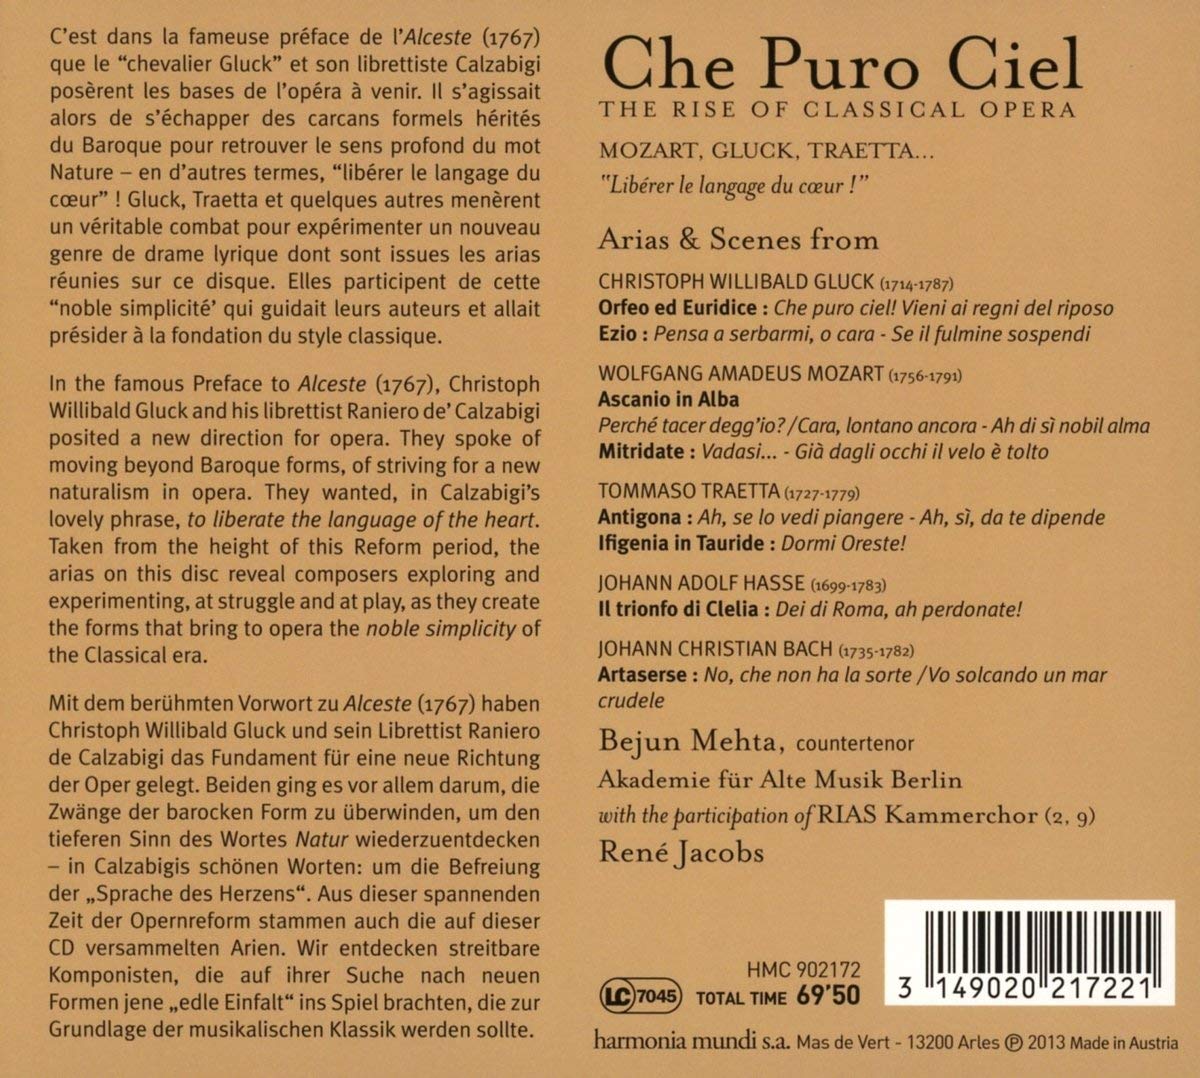 Che Puro Ciel!: The Rise of Classical Opera - Bejun Mehta - slide-1